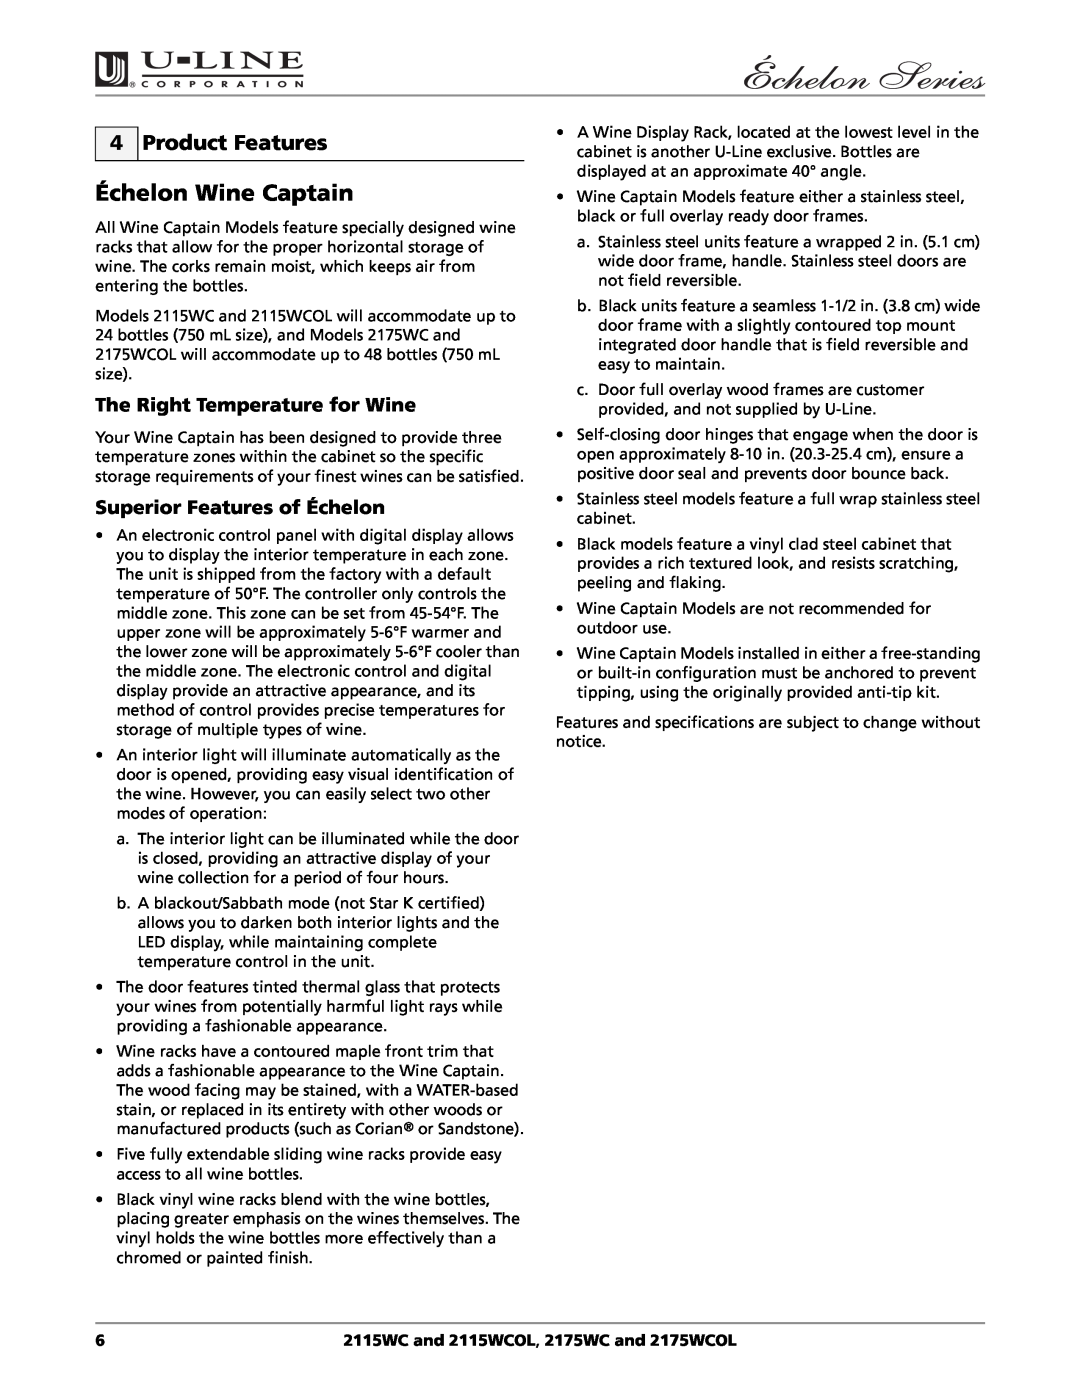 U-Line 2115WC manual Échelon Wine Captain, Product Features, The Right Temperature for Wine, Superior Features of Échelon 